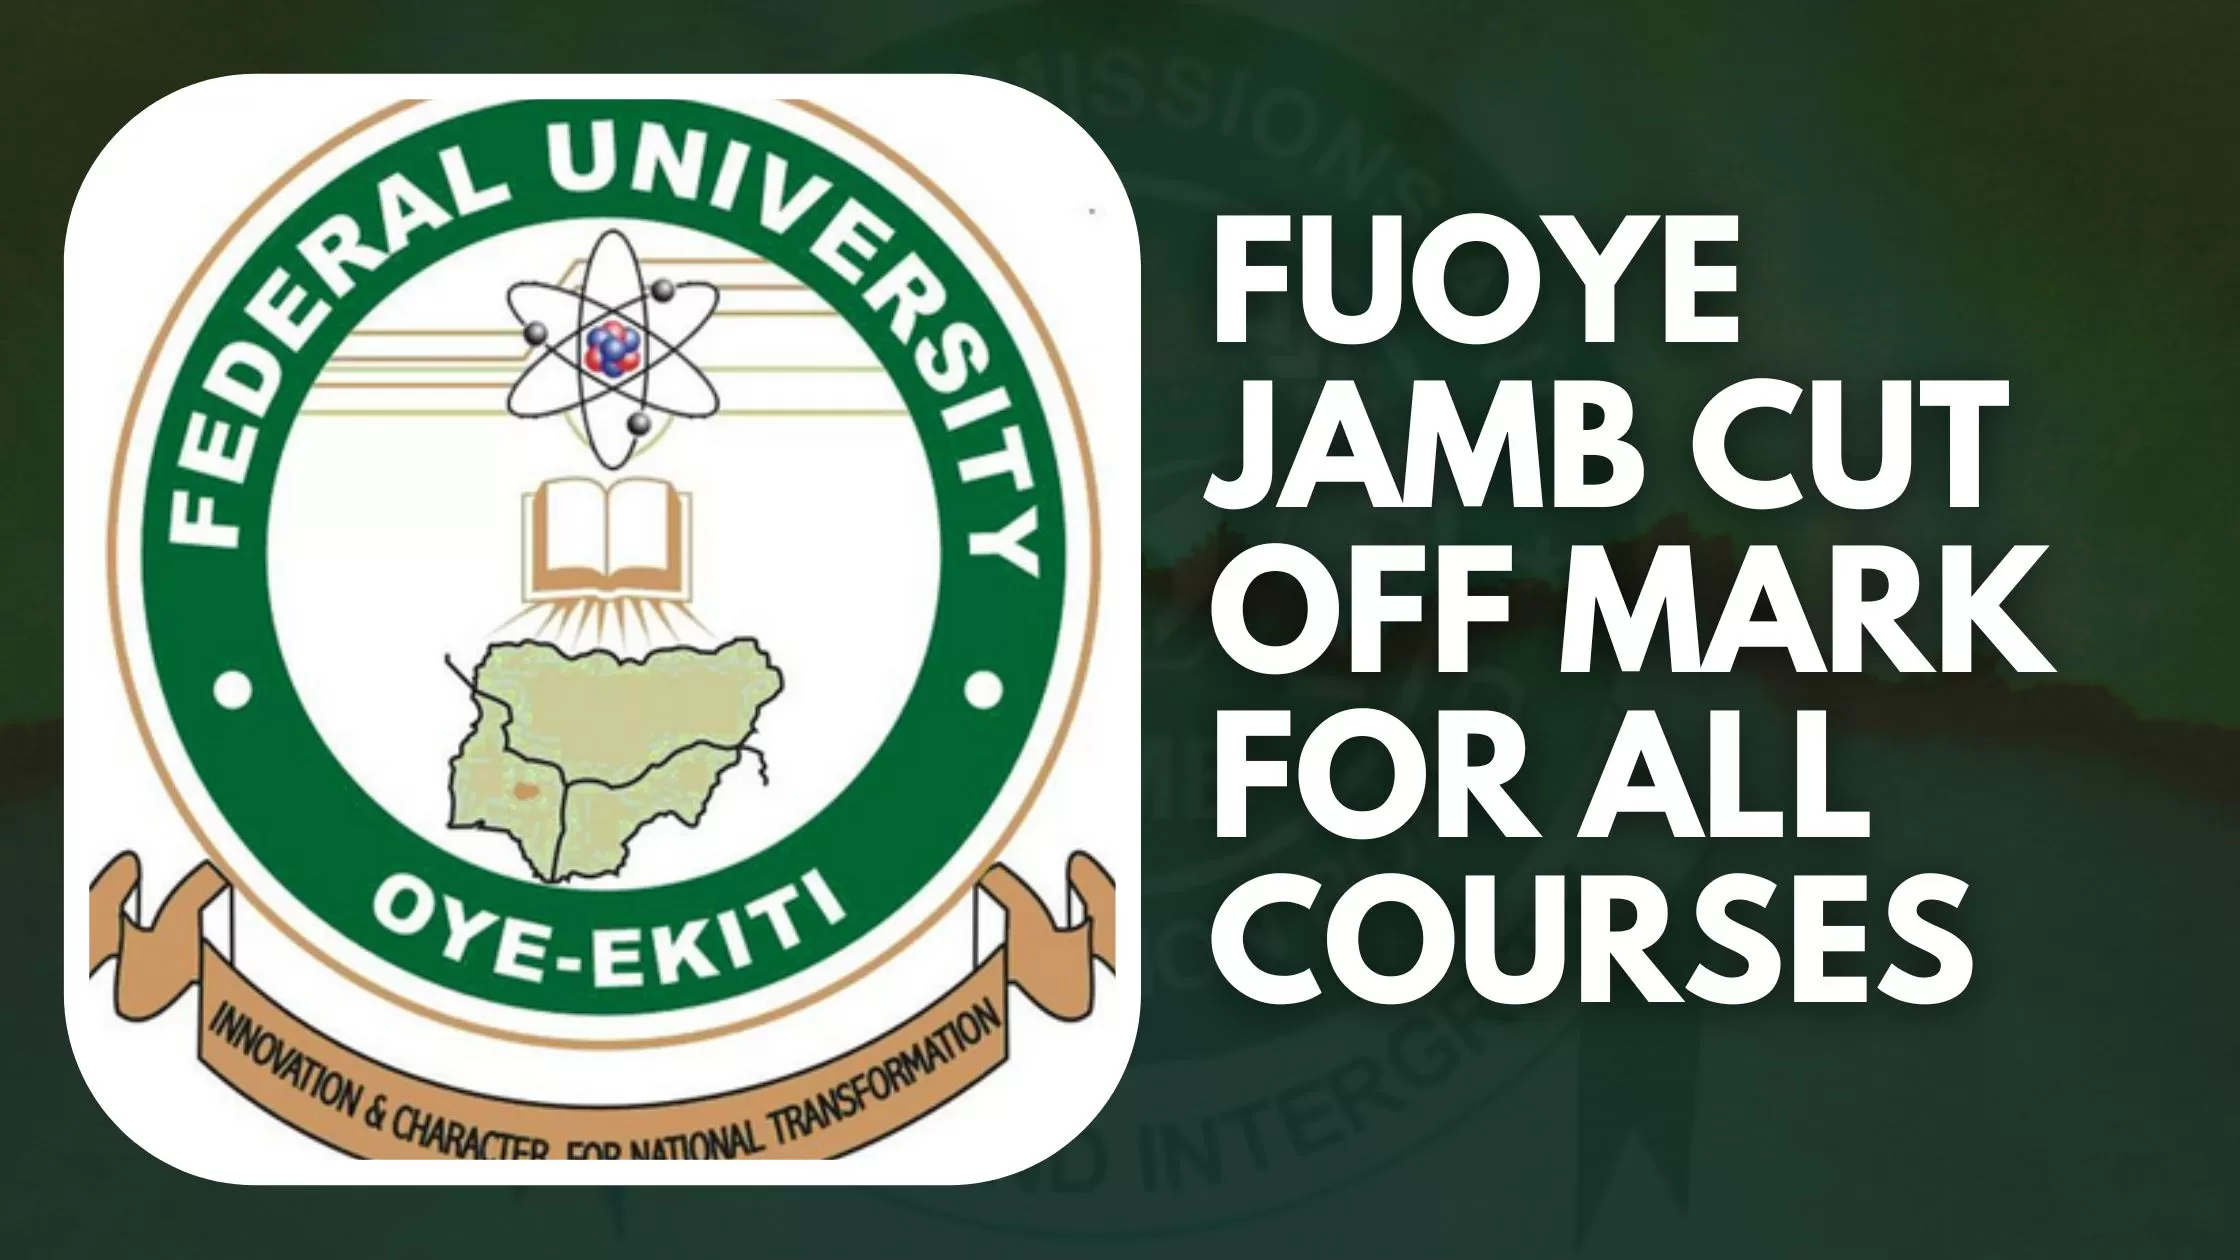 FUOYE Cut Off Mark for All Courses- Federal University Oye-Ekiti Cut Off Mark